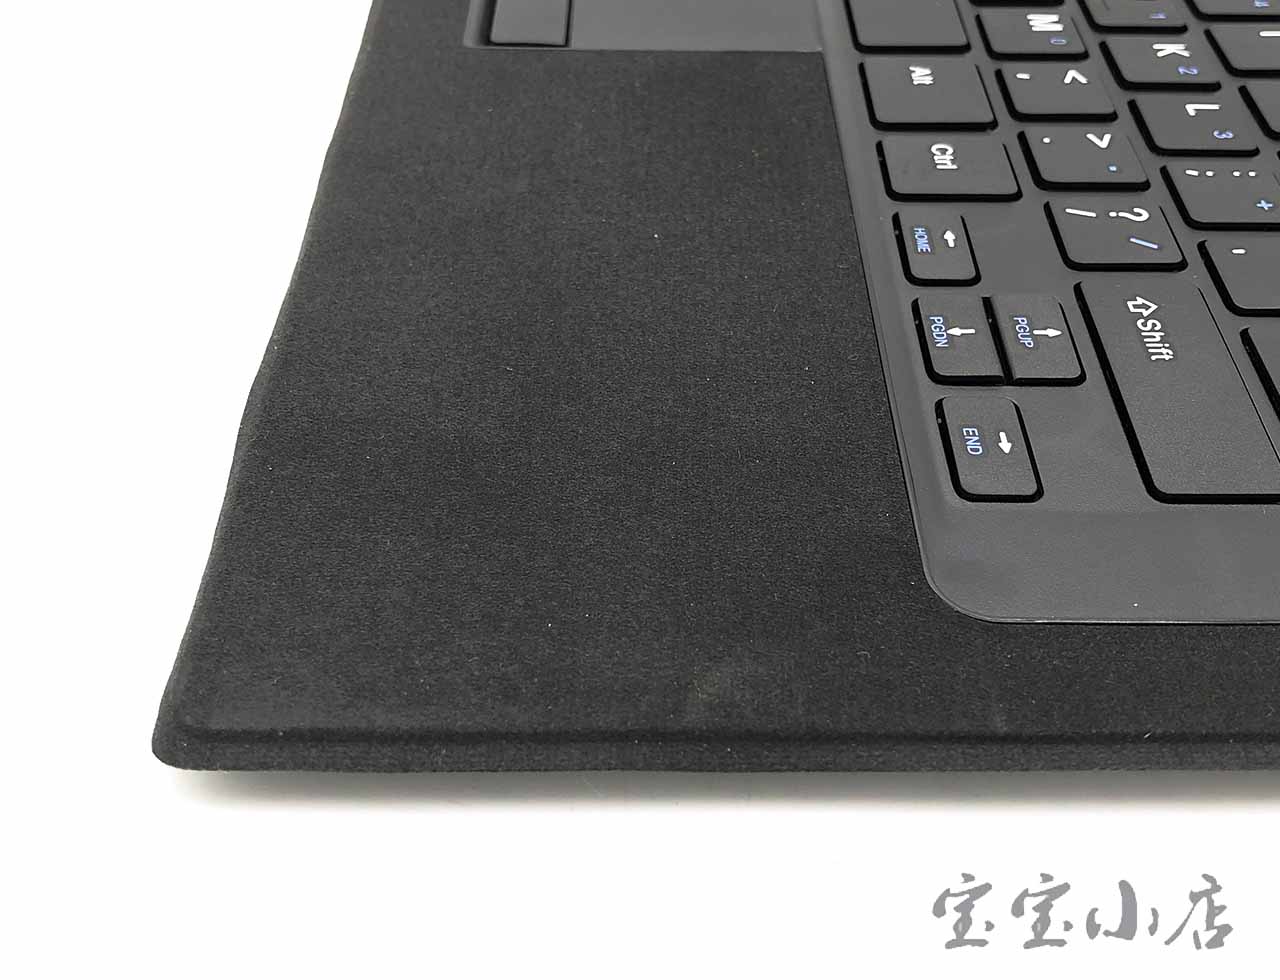 Hasee/神舟 PCpad Plus Pro 平板 EB10S01键盘皮套 BKC800 13.3寸 black keyboard